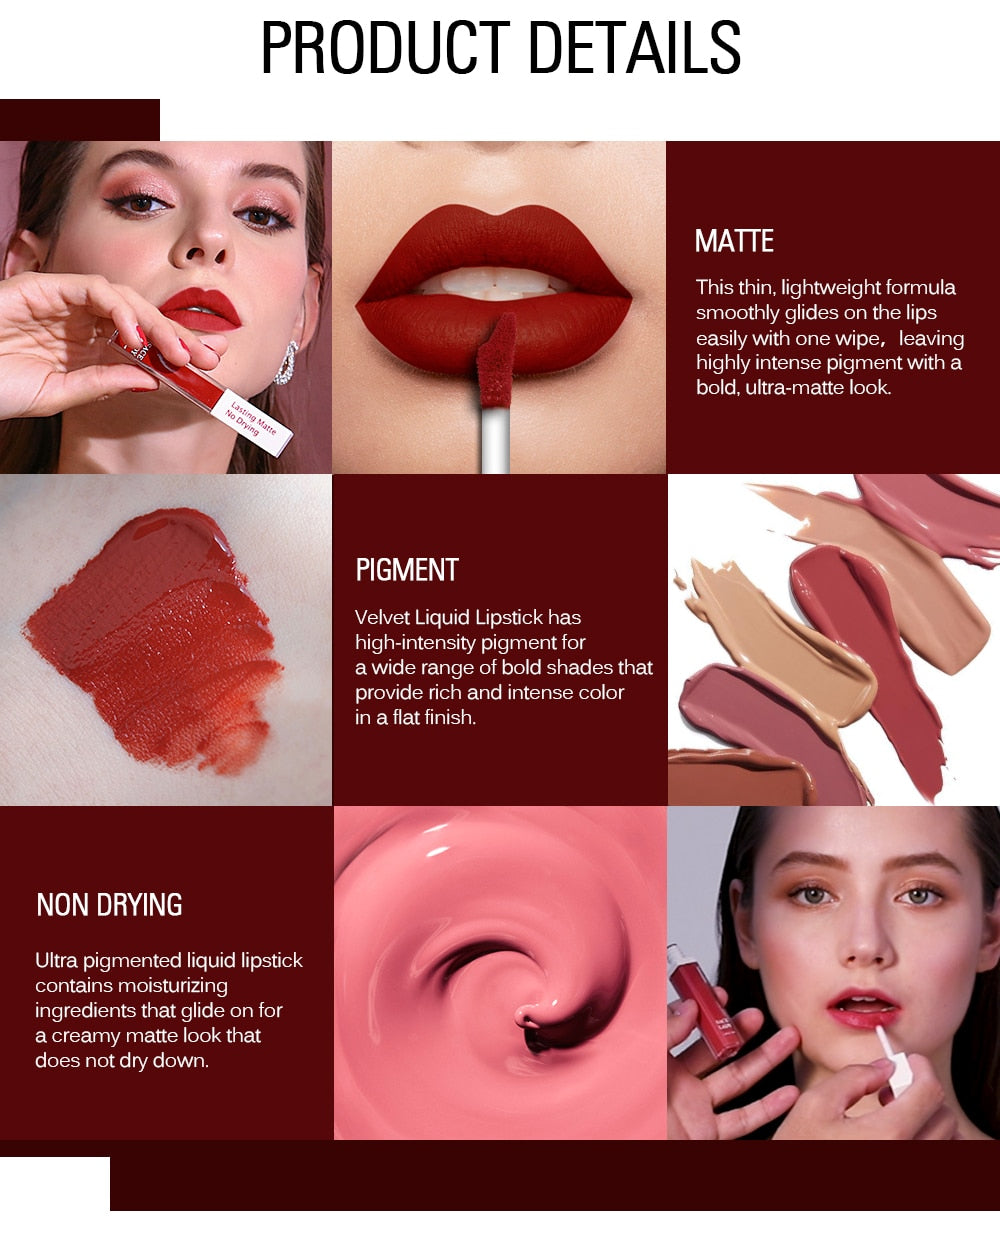 Professional Long lasting Lipstick - 19pcs/Set